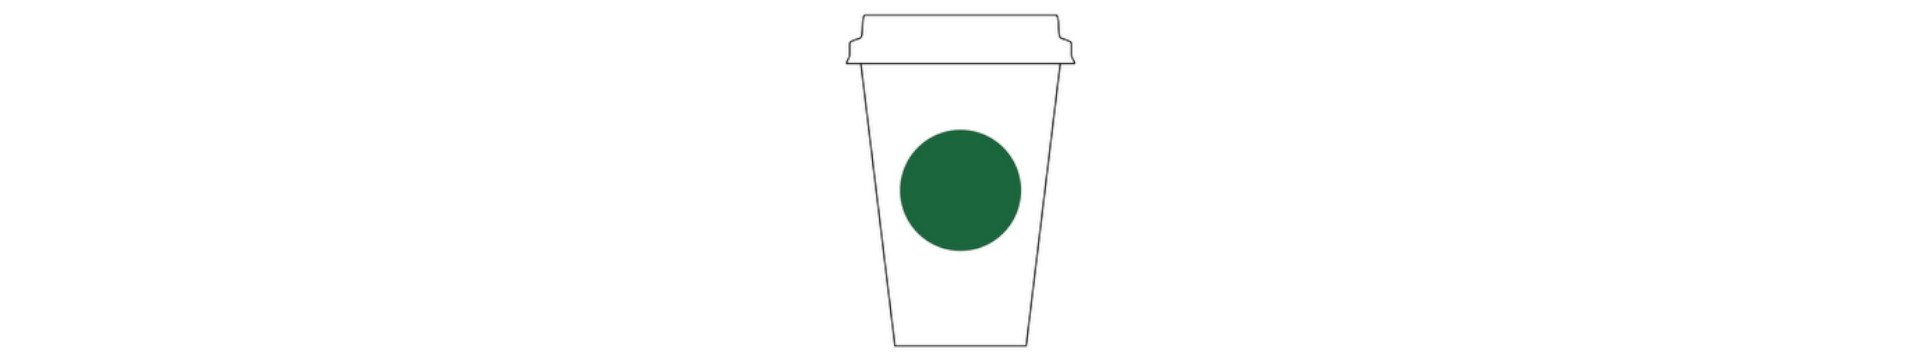 Groene cirkel van Starbucks